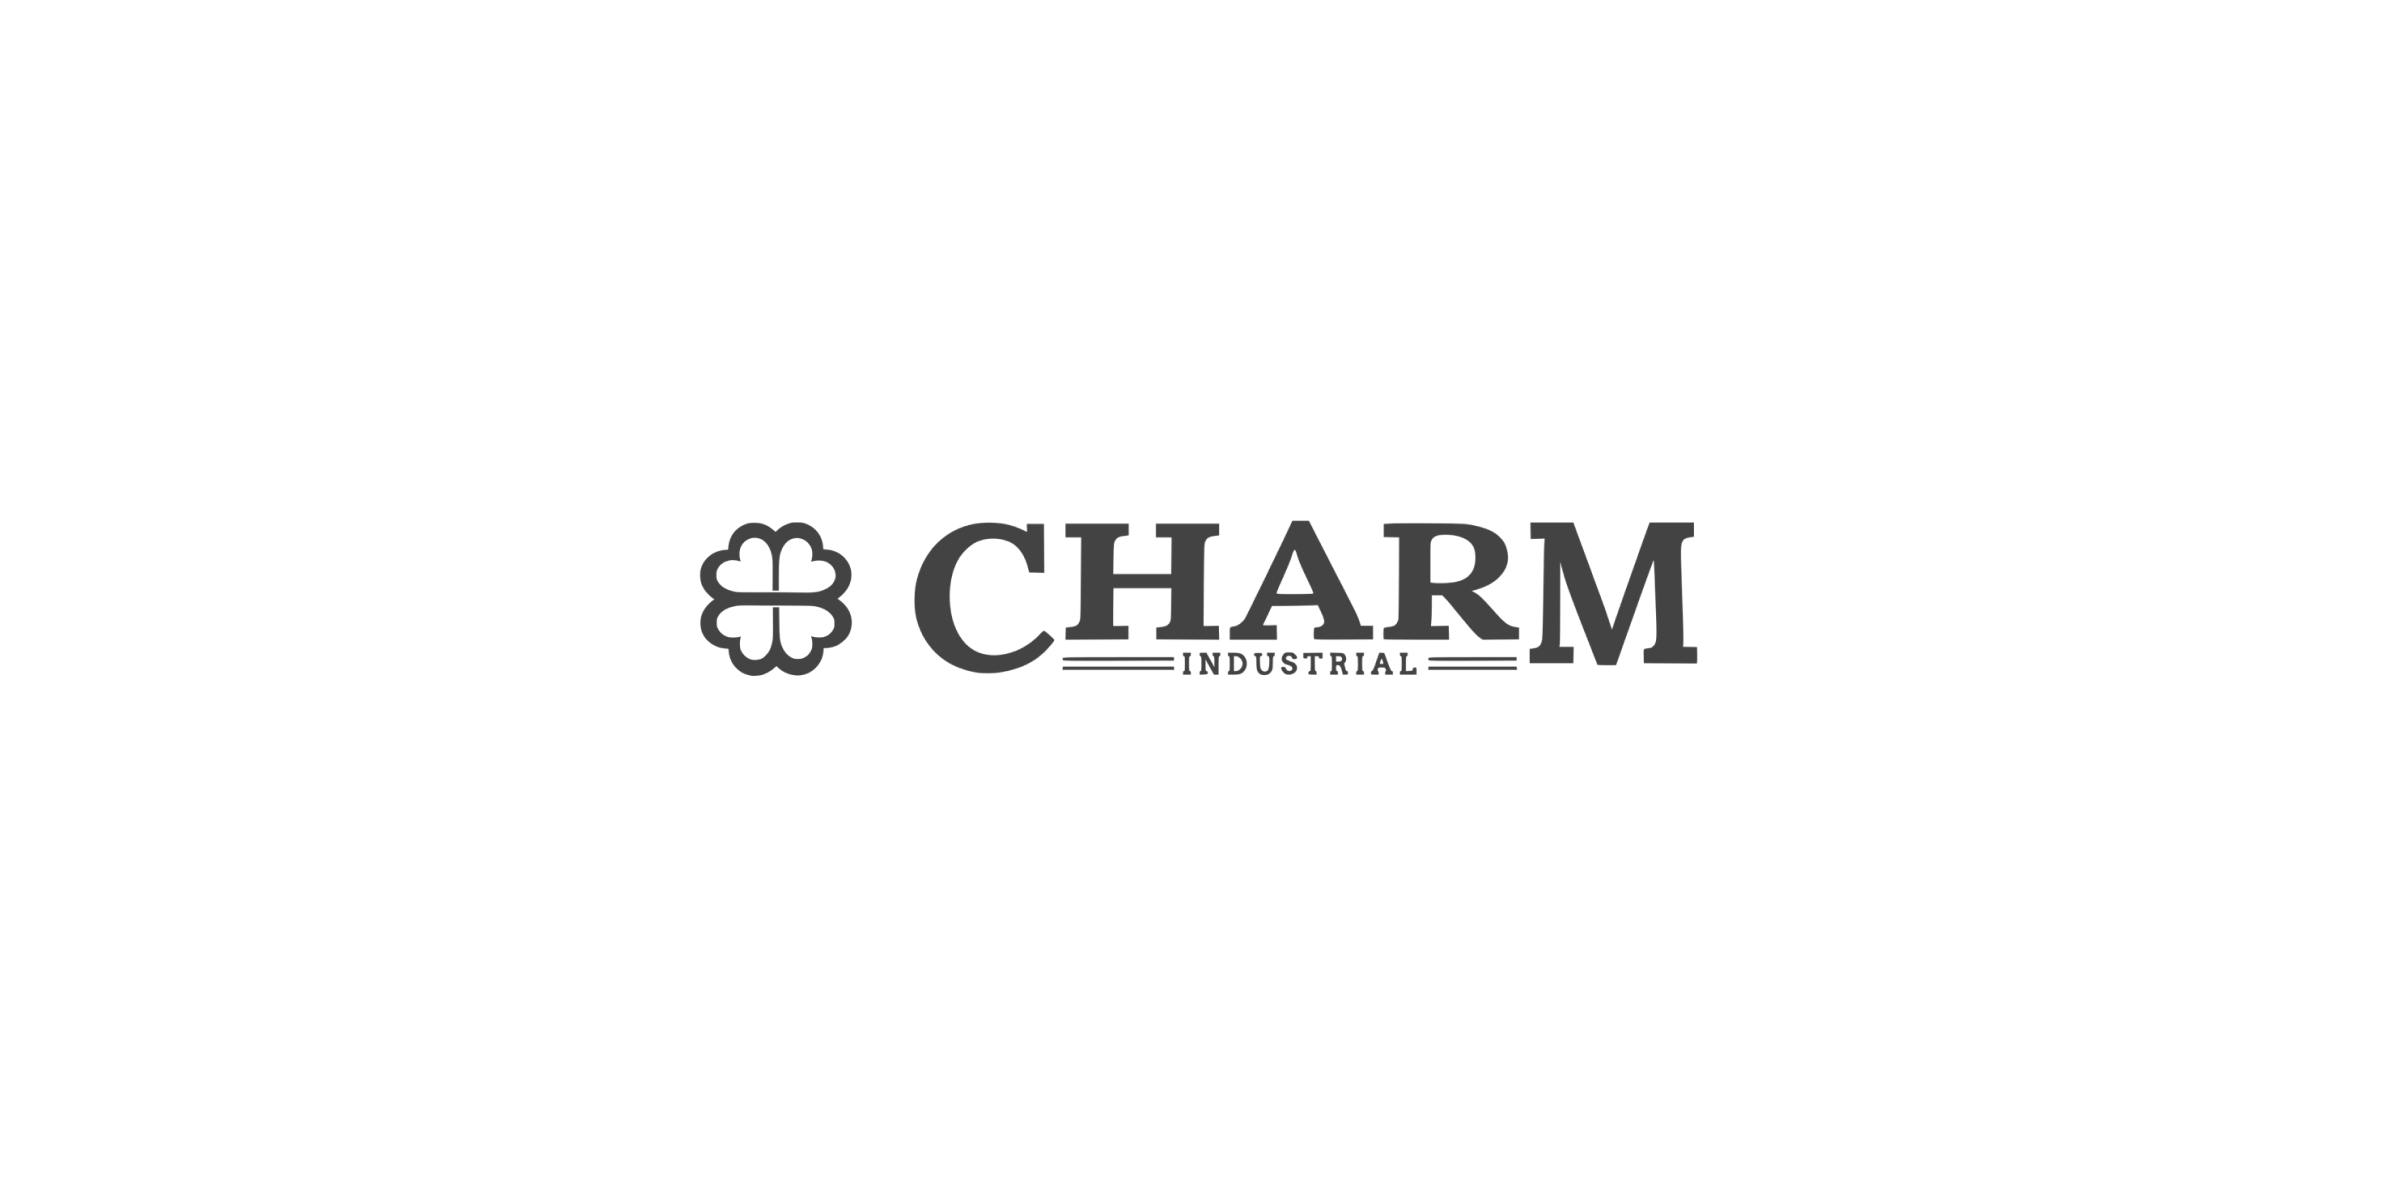 Report: Charm Industrial Business Breakdown & Founding Story